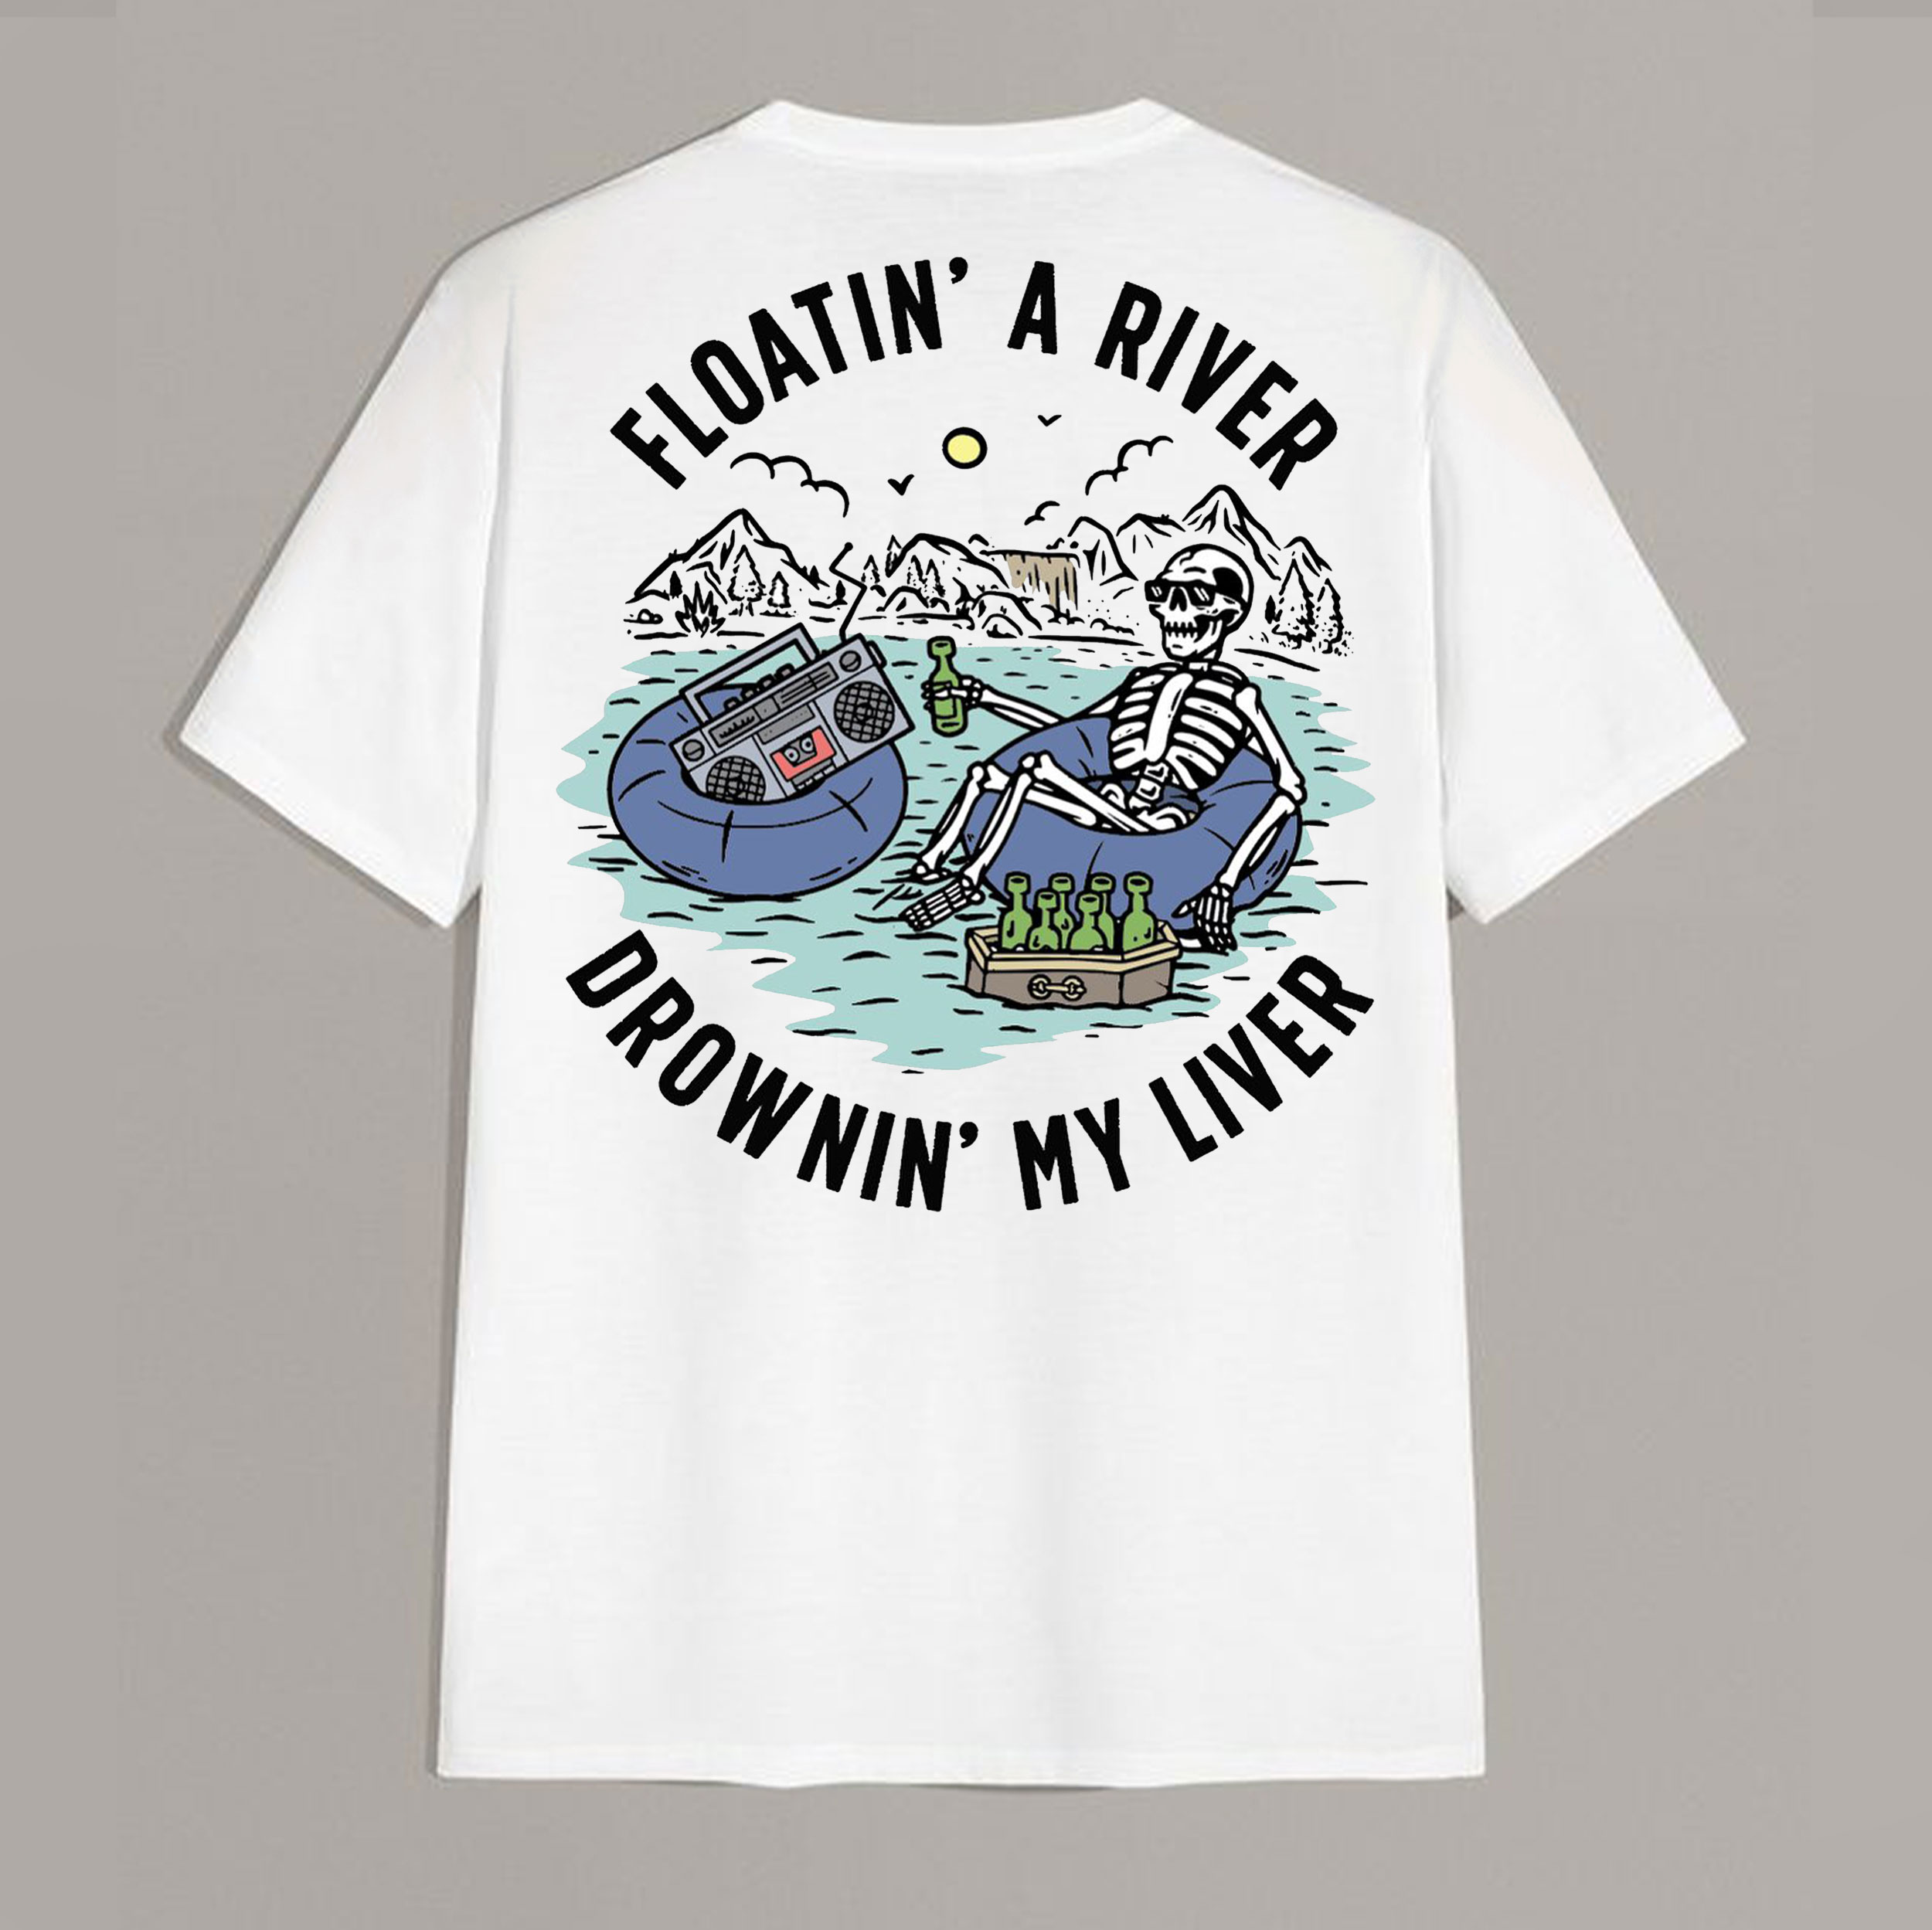 FLOATIN' A RIVER DROWNIN' MY LIVER White Print T-Shirt